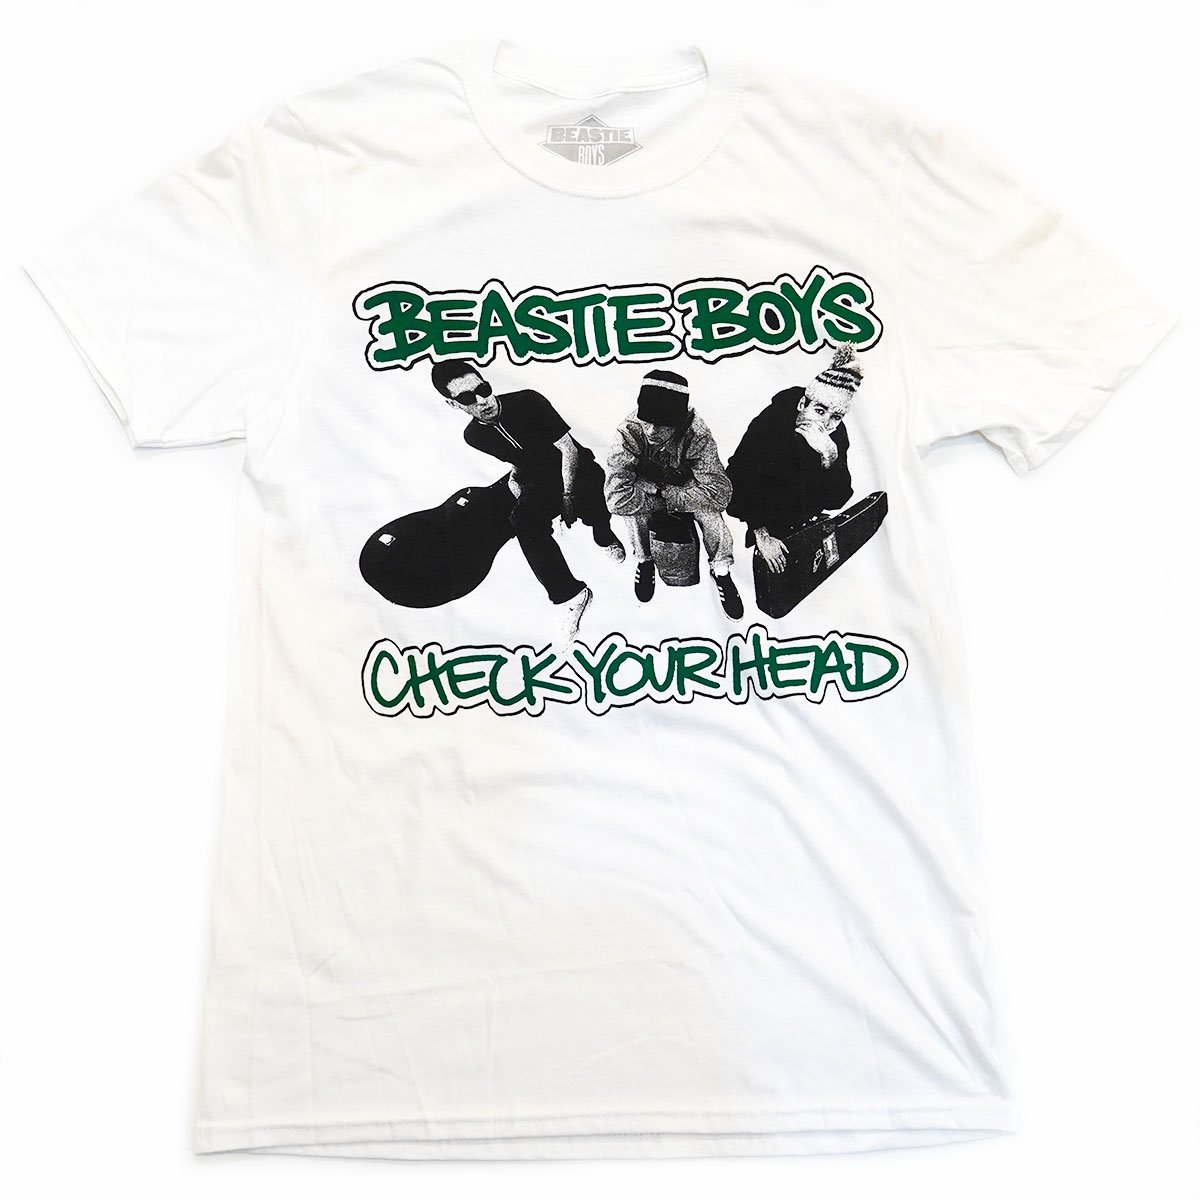 Beastie Boys ビースティーボーイズ フォト tシャツ tee - sfgeep.org